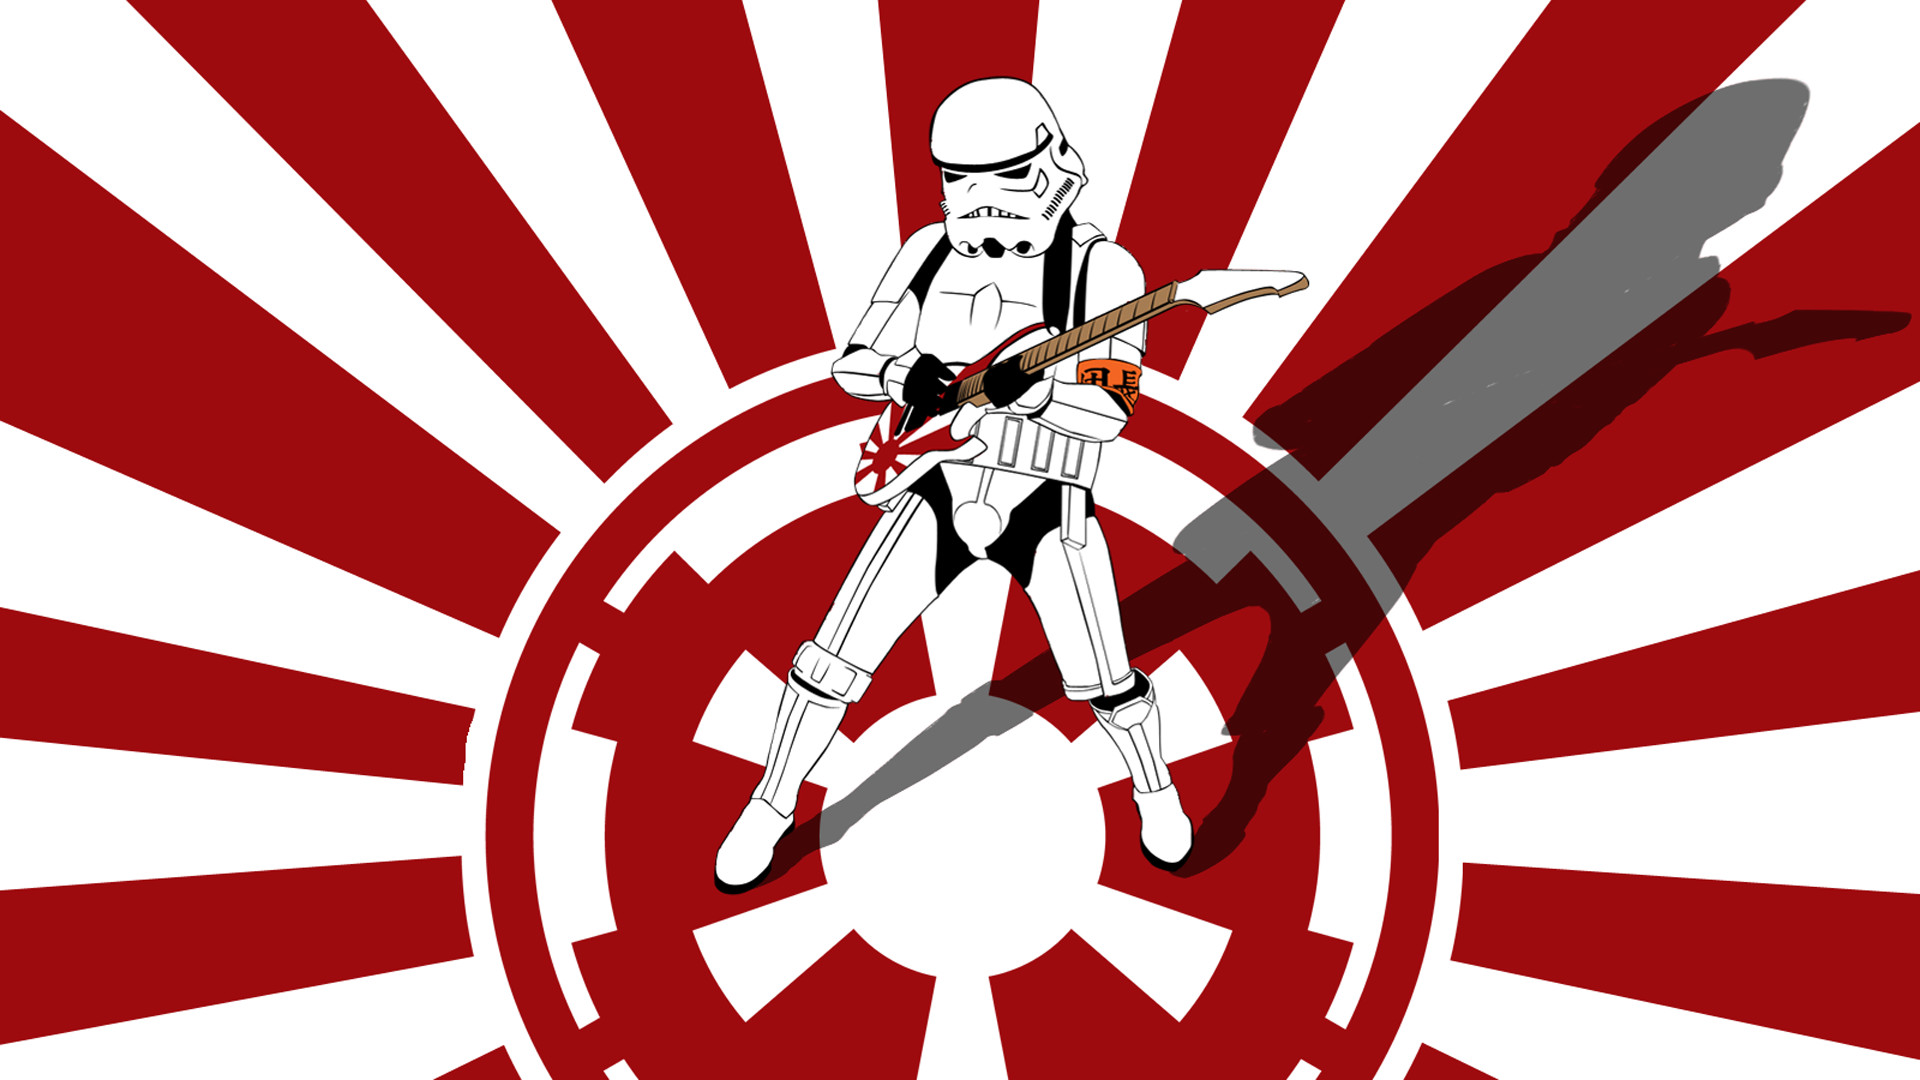 Movie Star Wars White Red Troop Storm Guitar Wars Star Wallpaper